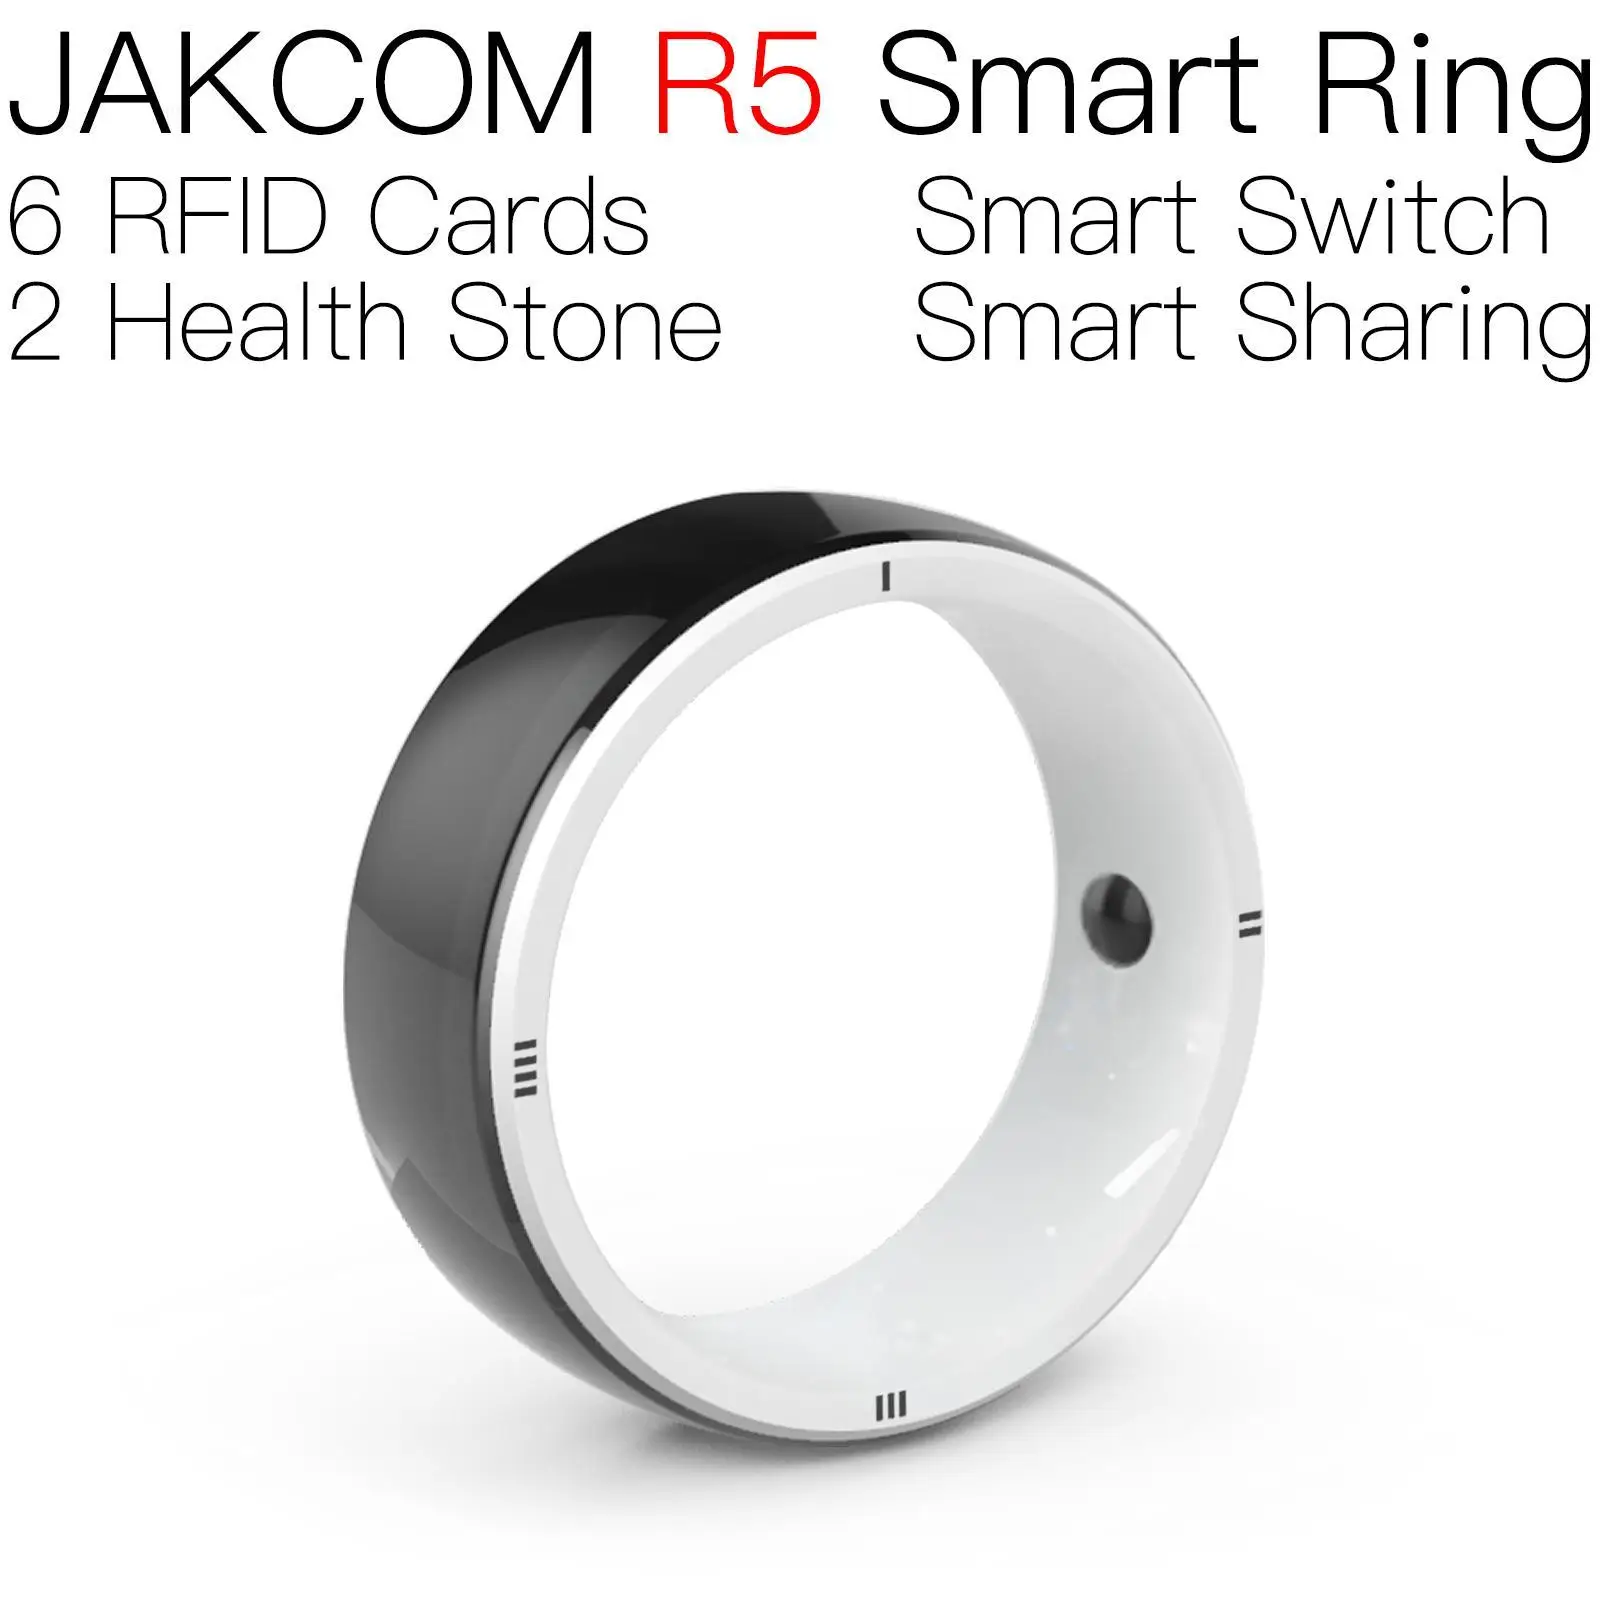 

JAKCOM R5 Smart Ring Newer than joystick chip nfc resin tag custom rfid 7byte uid ntag215 cards long range uhf label changeable